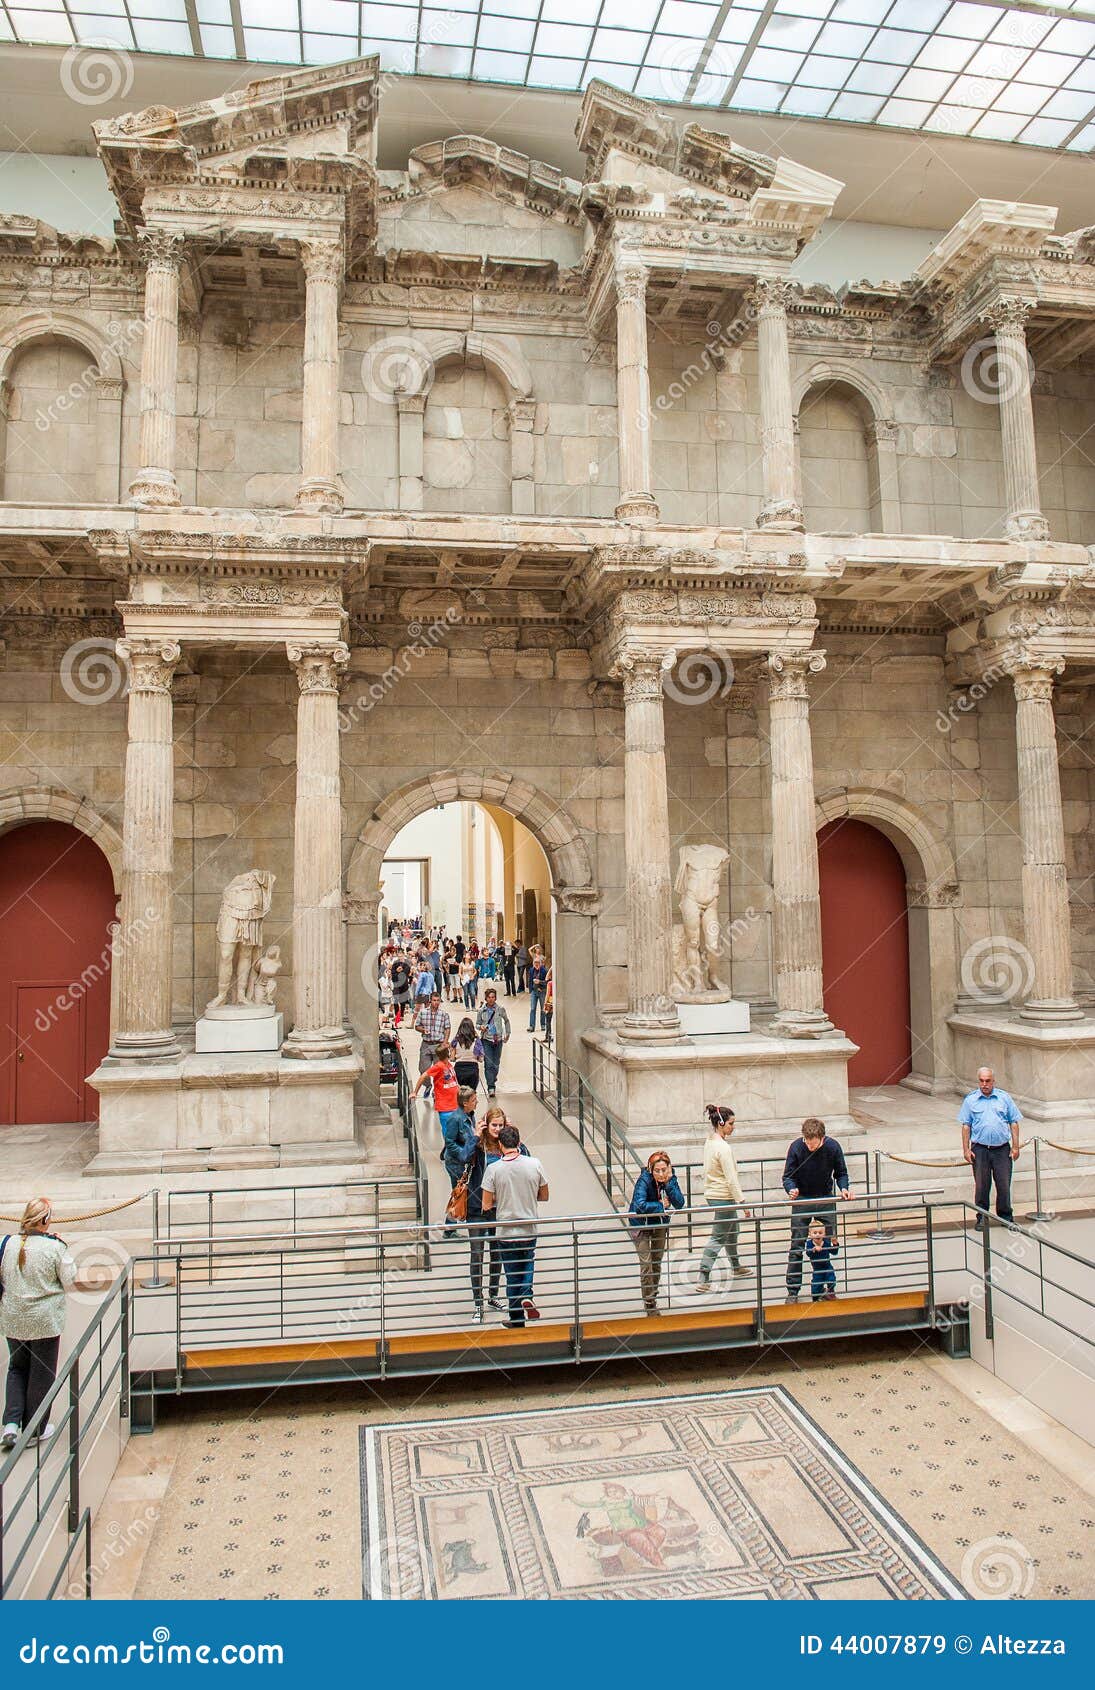 Tourists in Pergamon Museum in Berlin